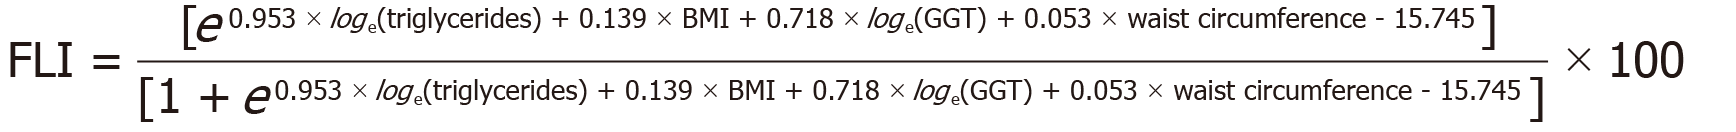 Figure formula